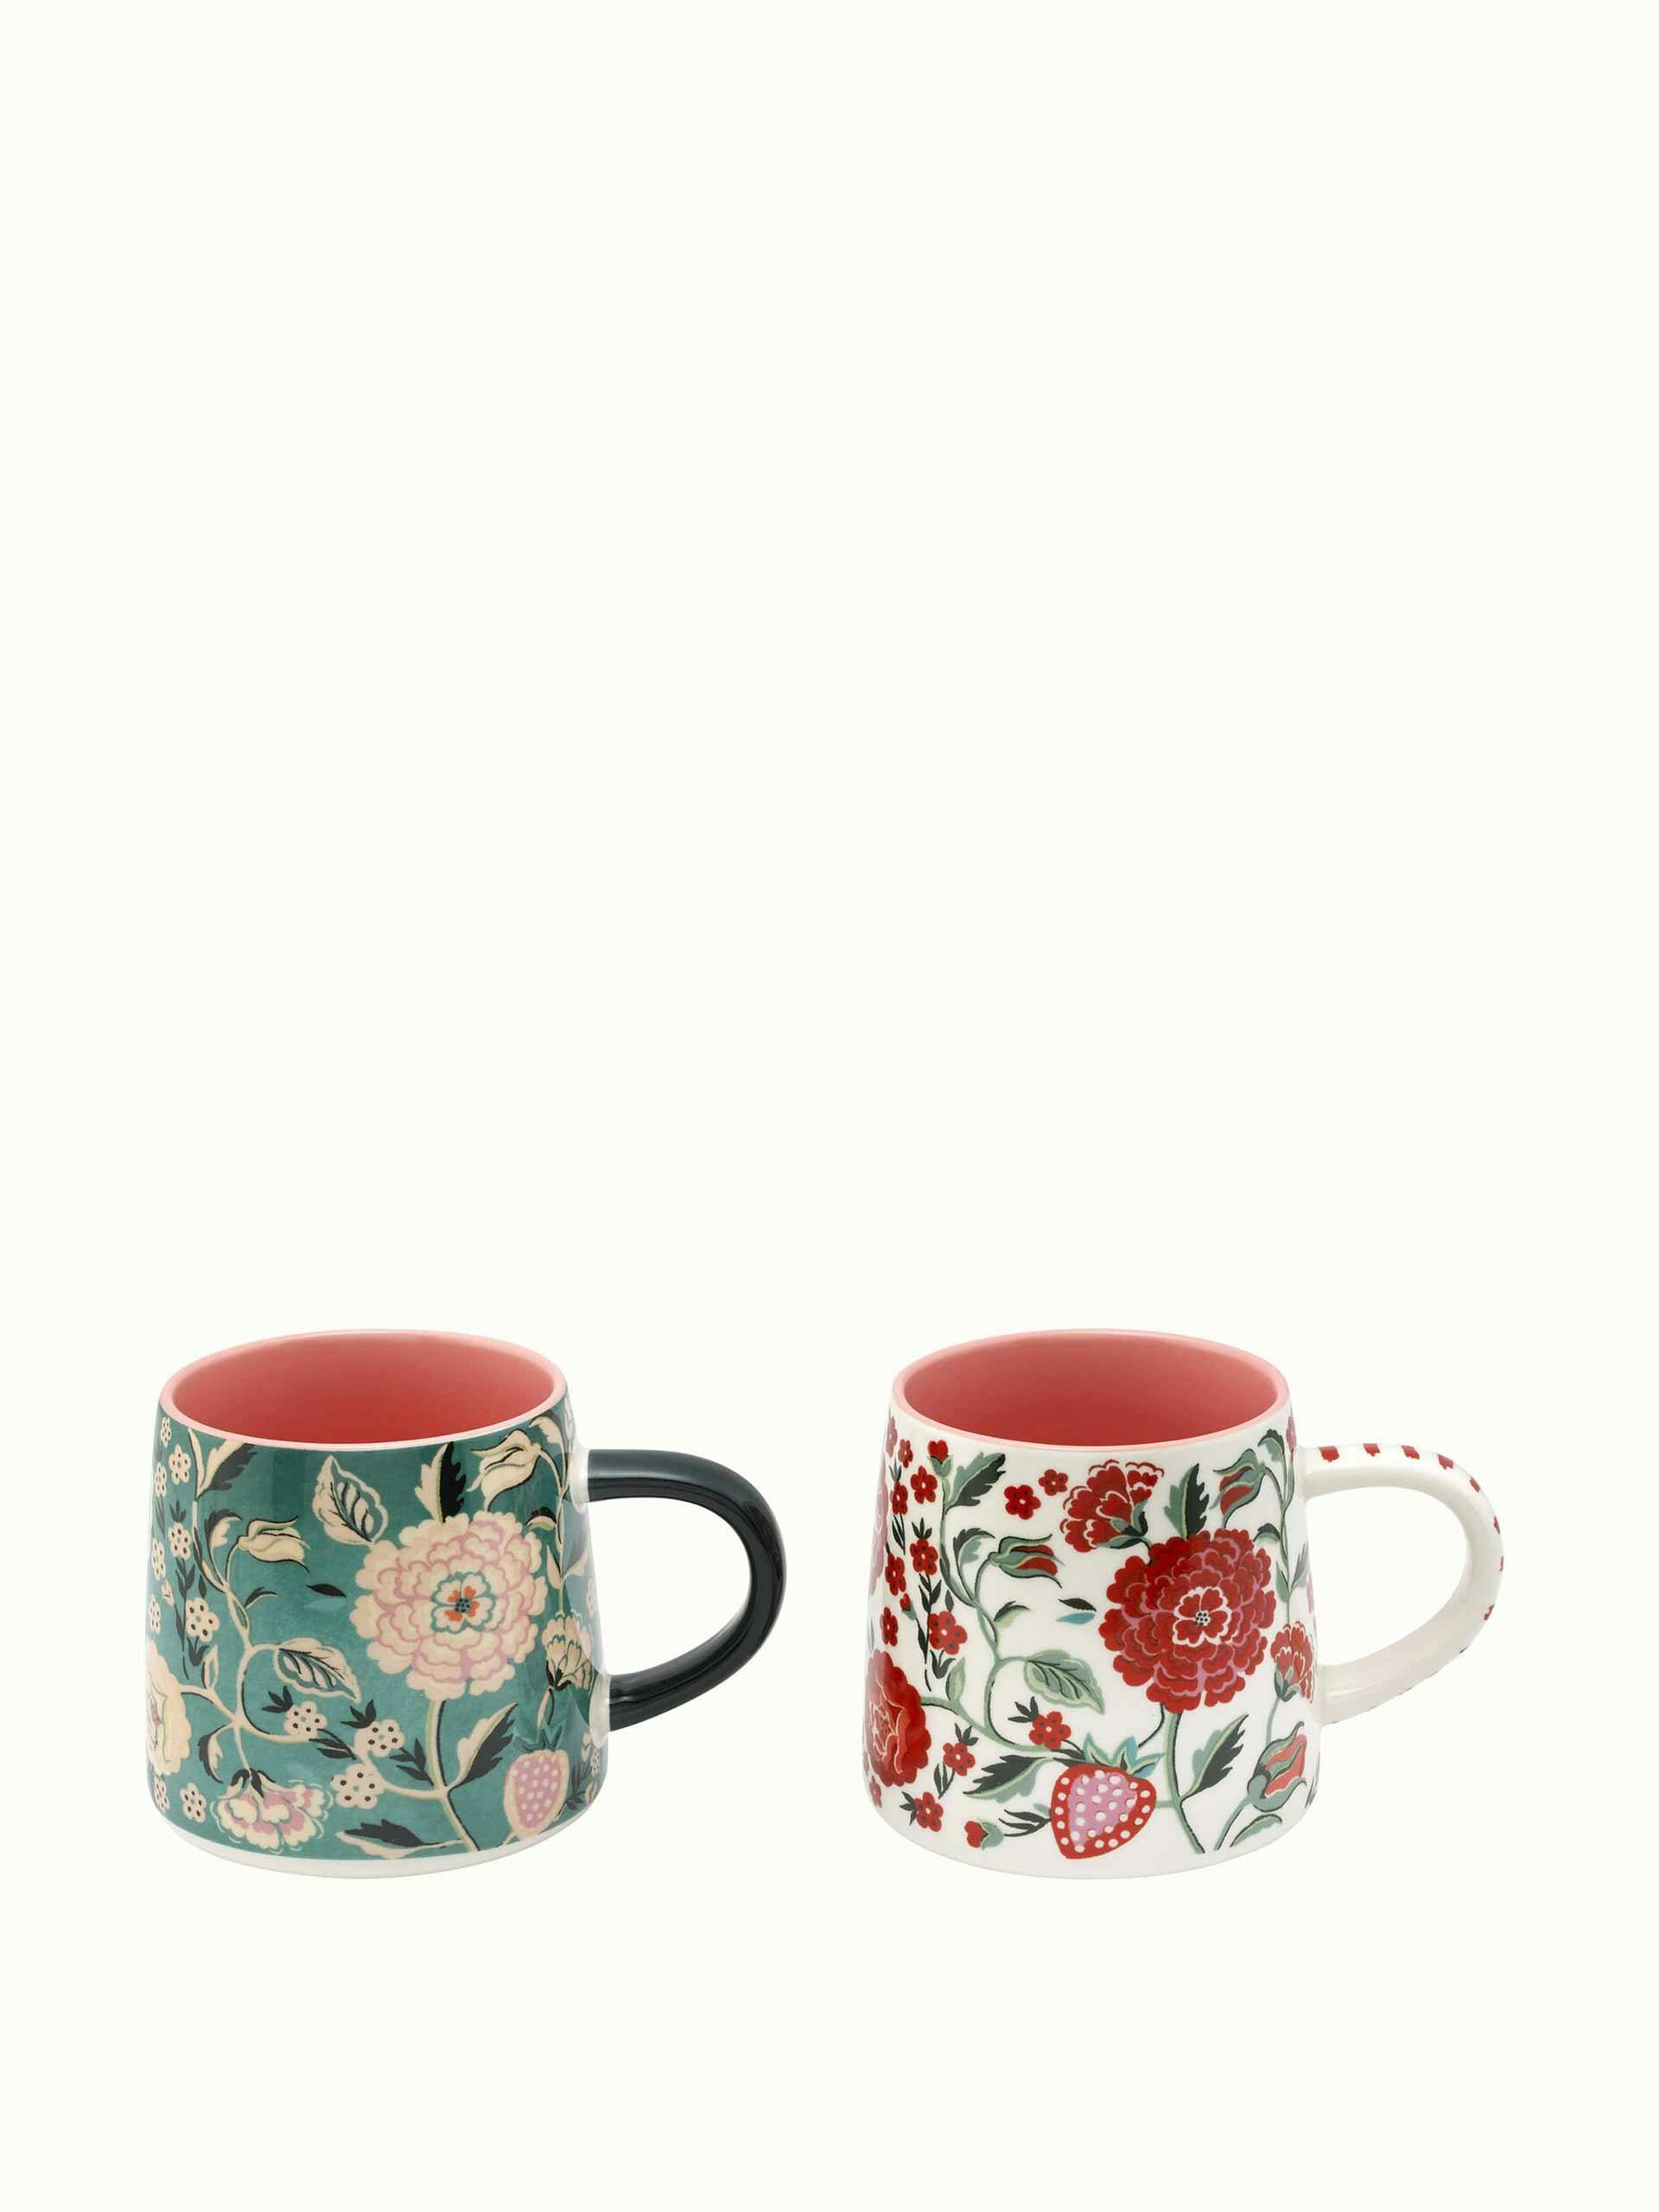 Strawberry garden mugs (set of 2)